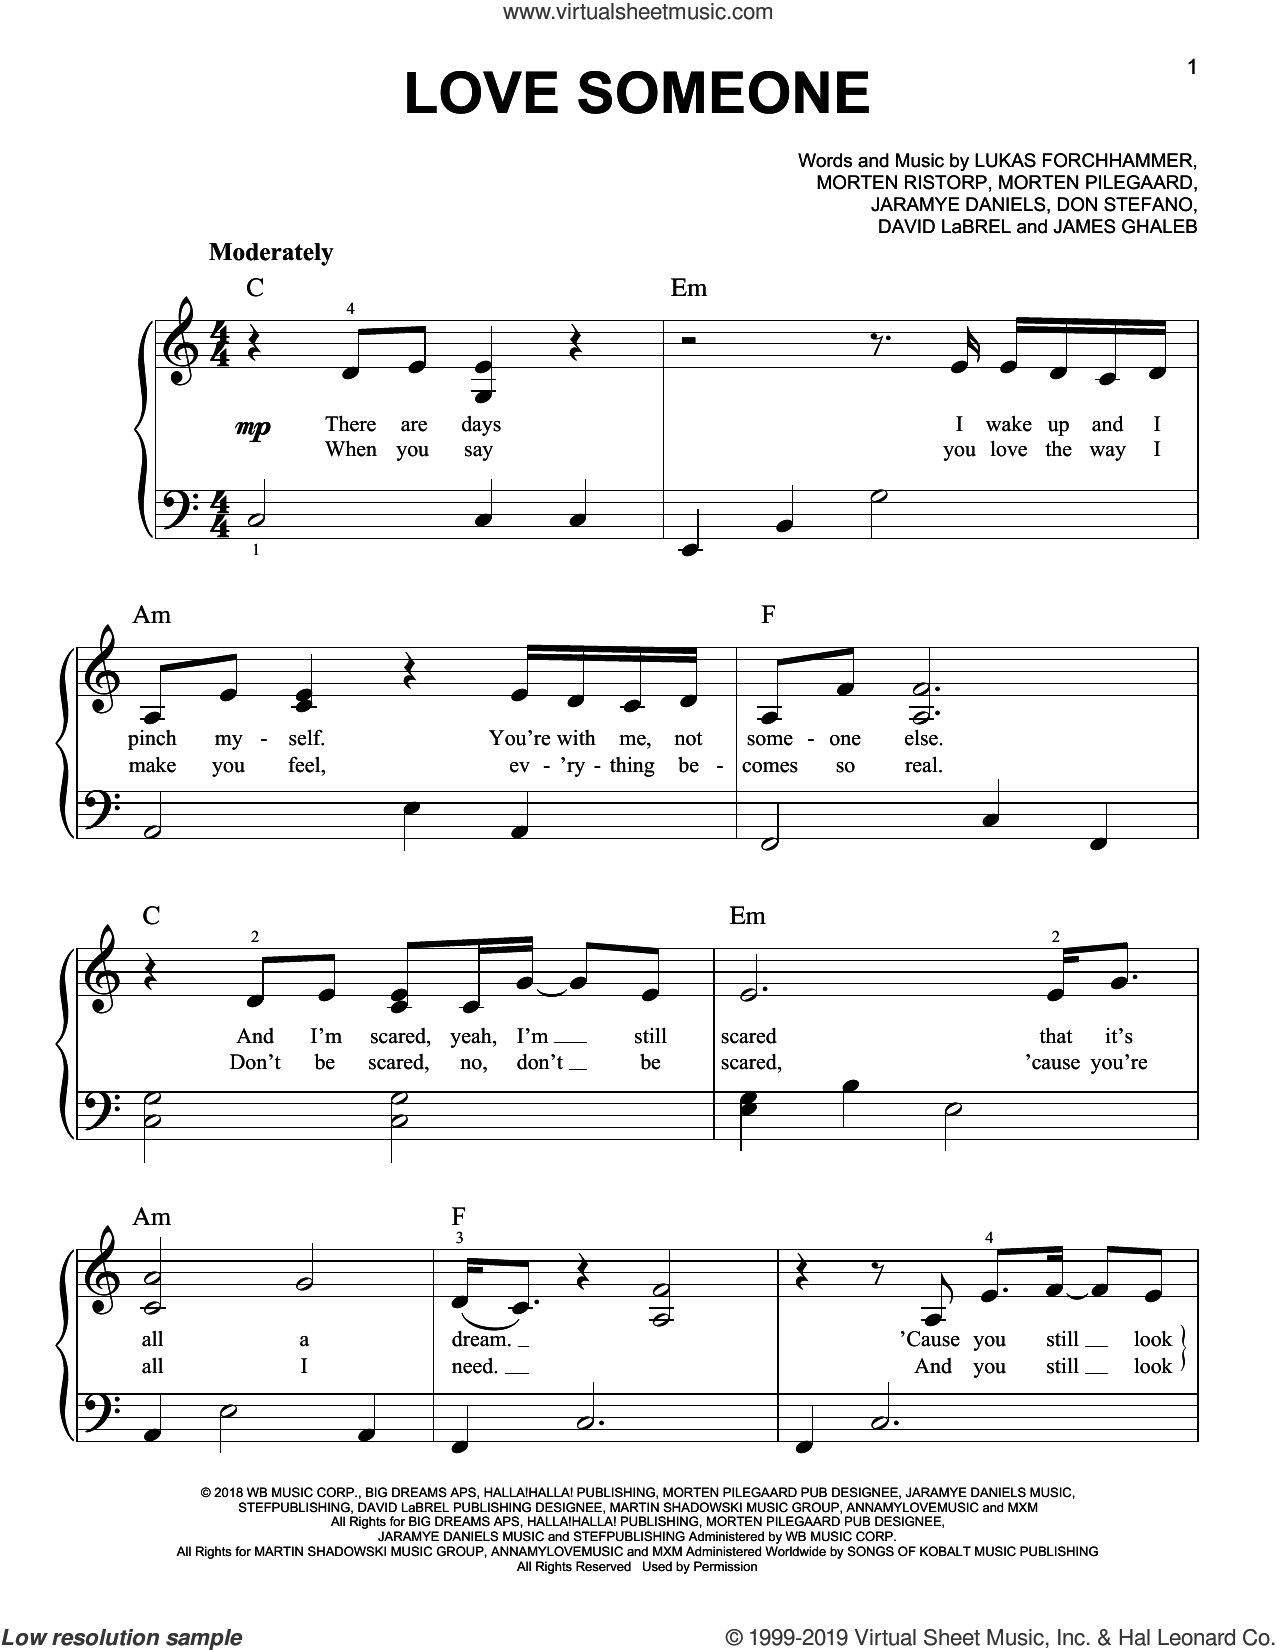 Oswald Decisión reparar Love Someone sheet music for piano solo (PDF-interactive)